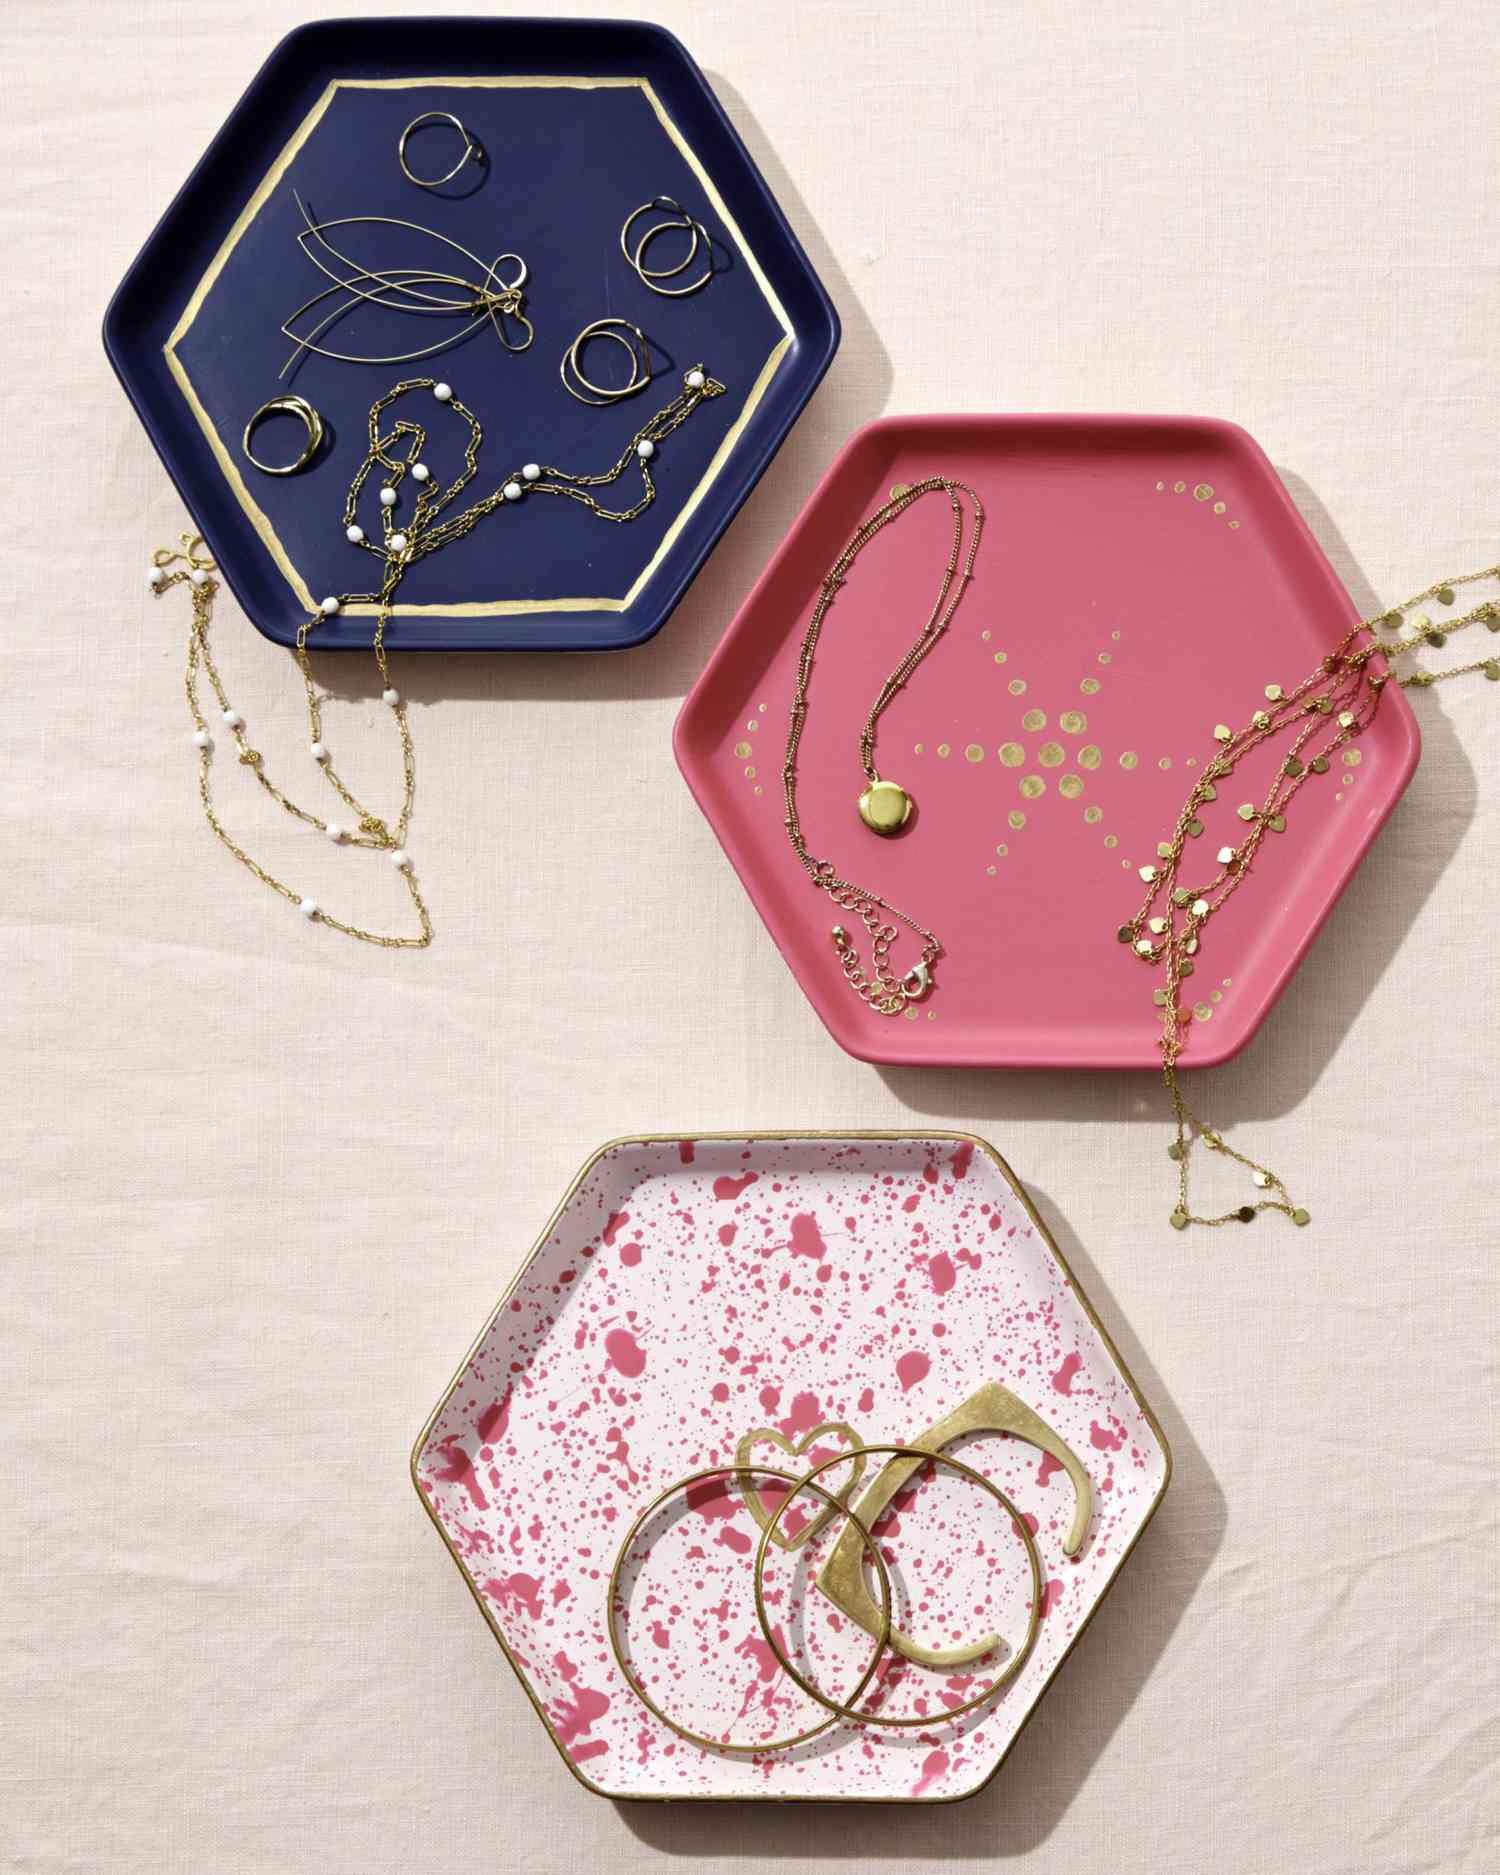 Home Art Wall Haging Jewelry Rack Necklace Pendants Bracelet Card Display 